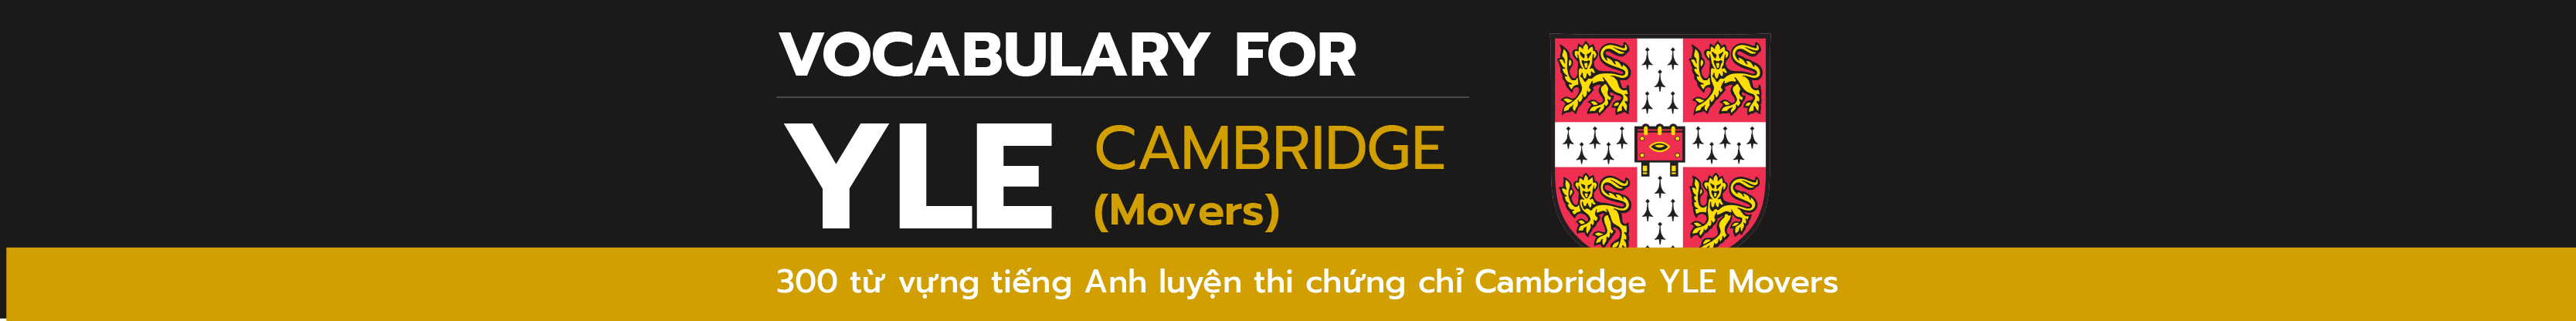 VOCA FOR CAMBRIDGE YLE (MOVERS)